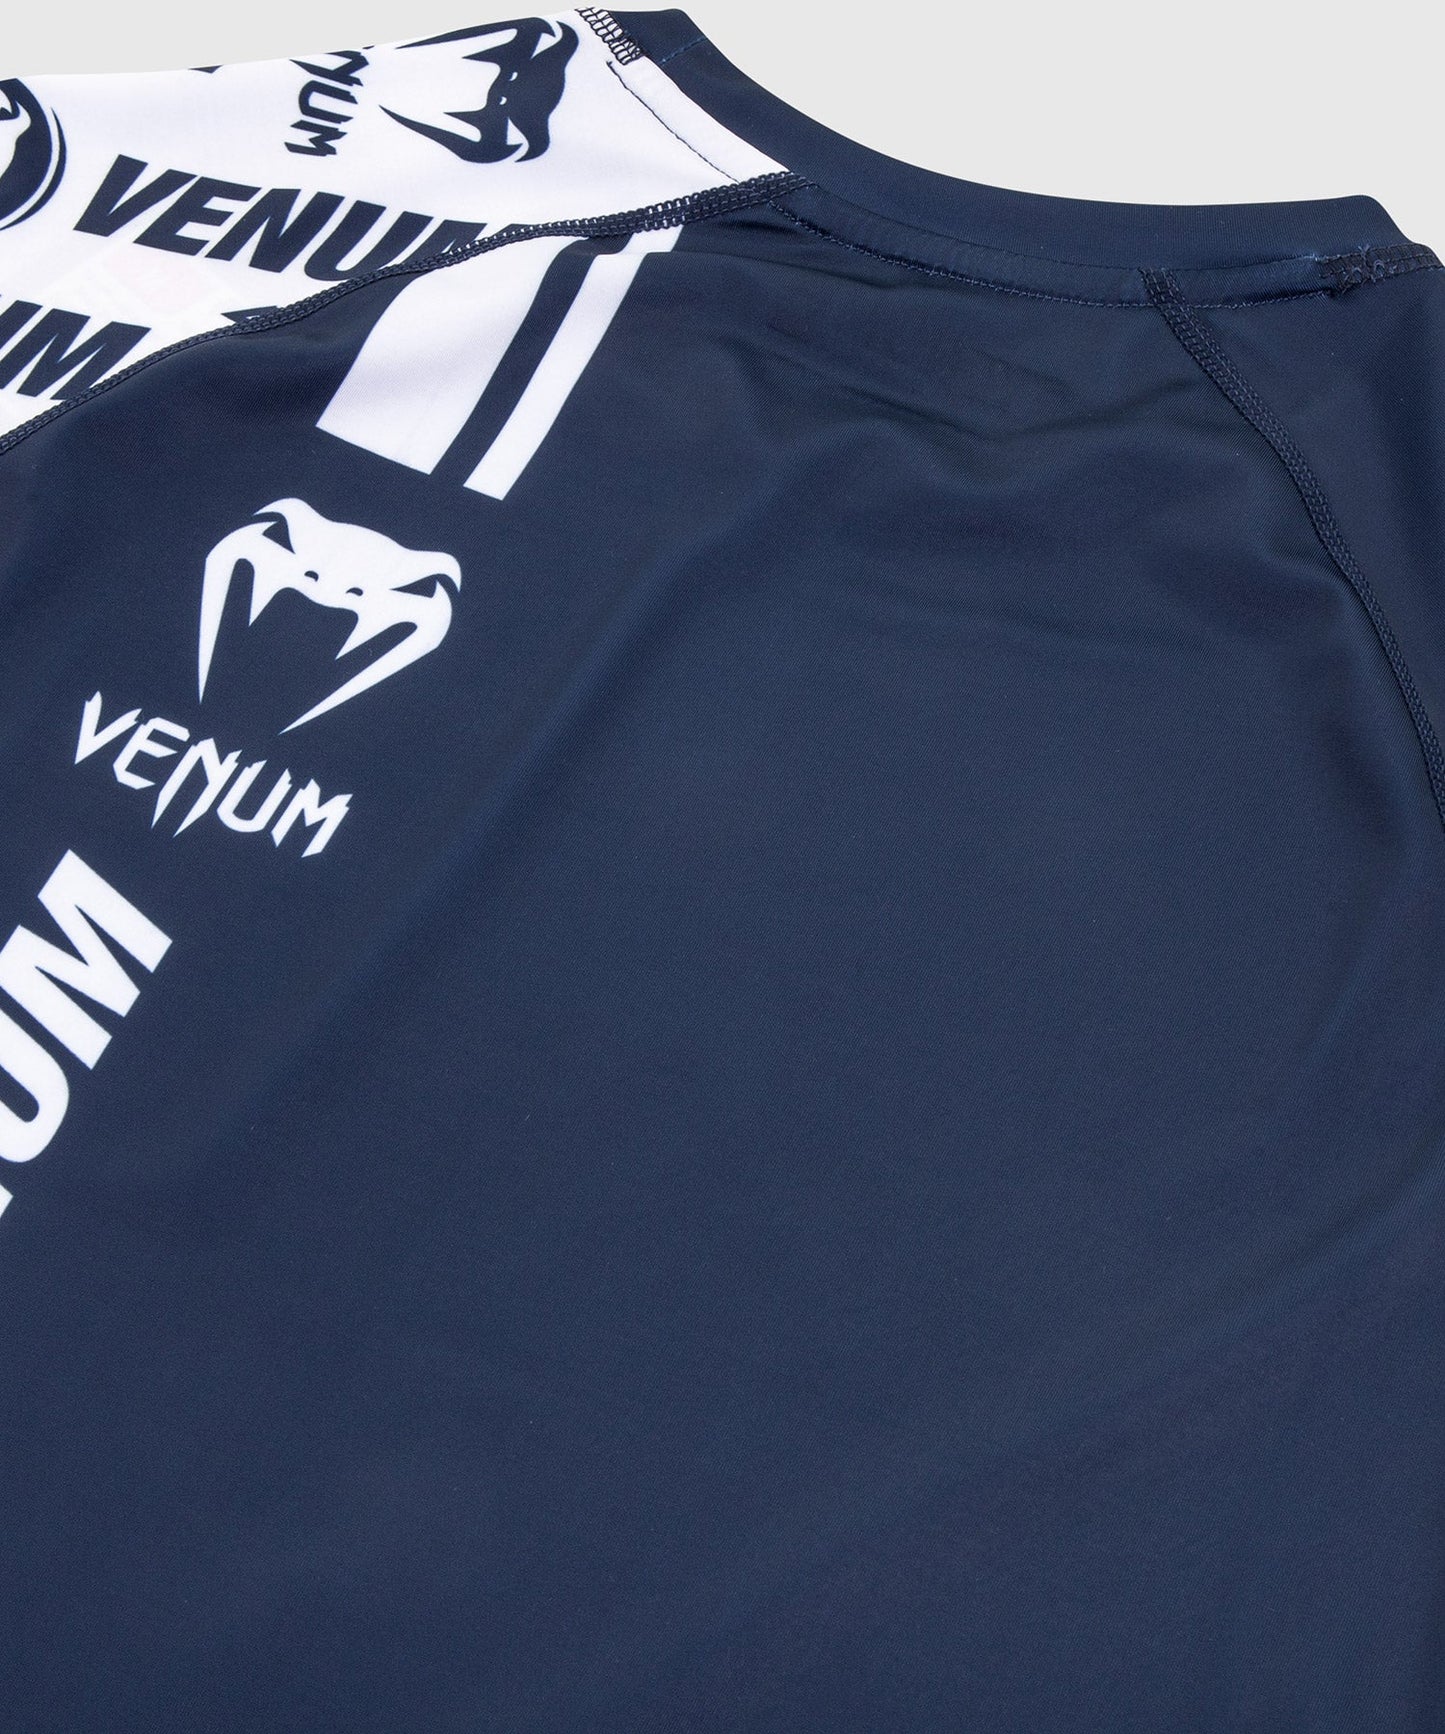 Venum Logos Rashguard - Short Sleeves - Navy Blue/White